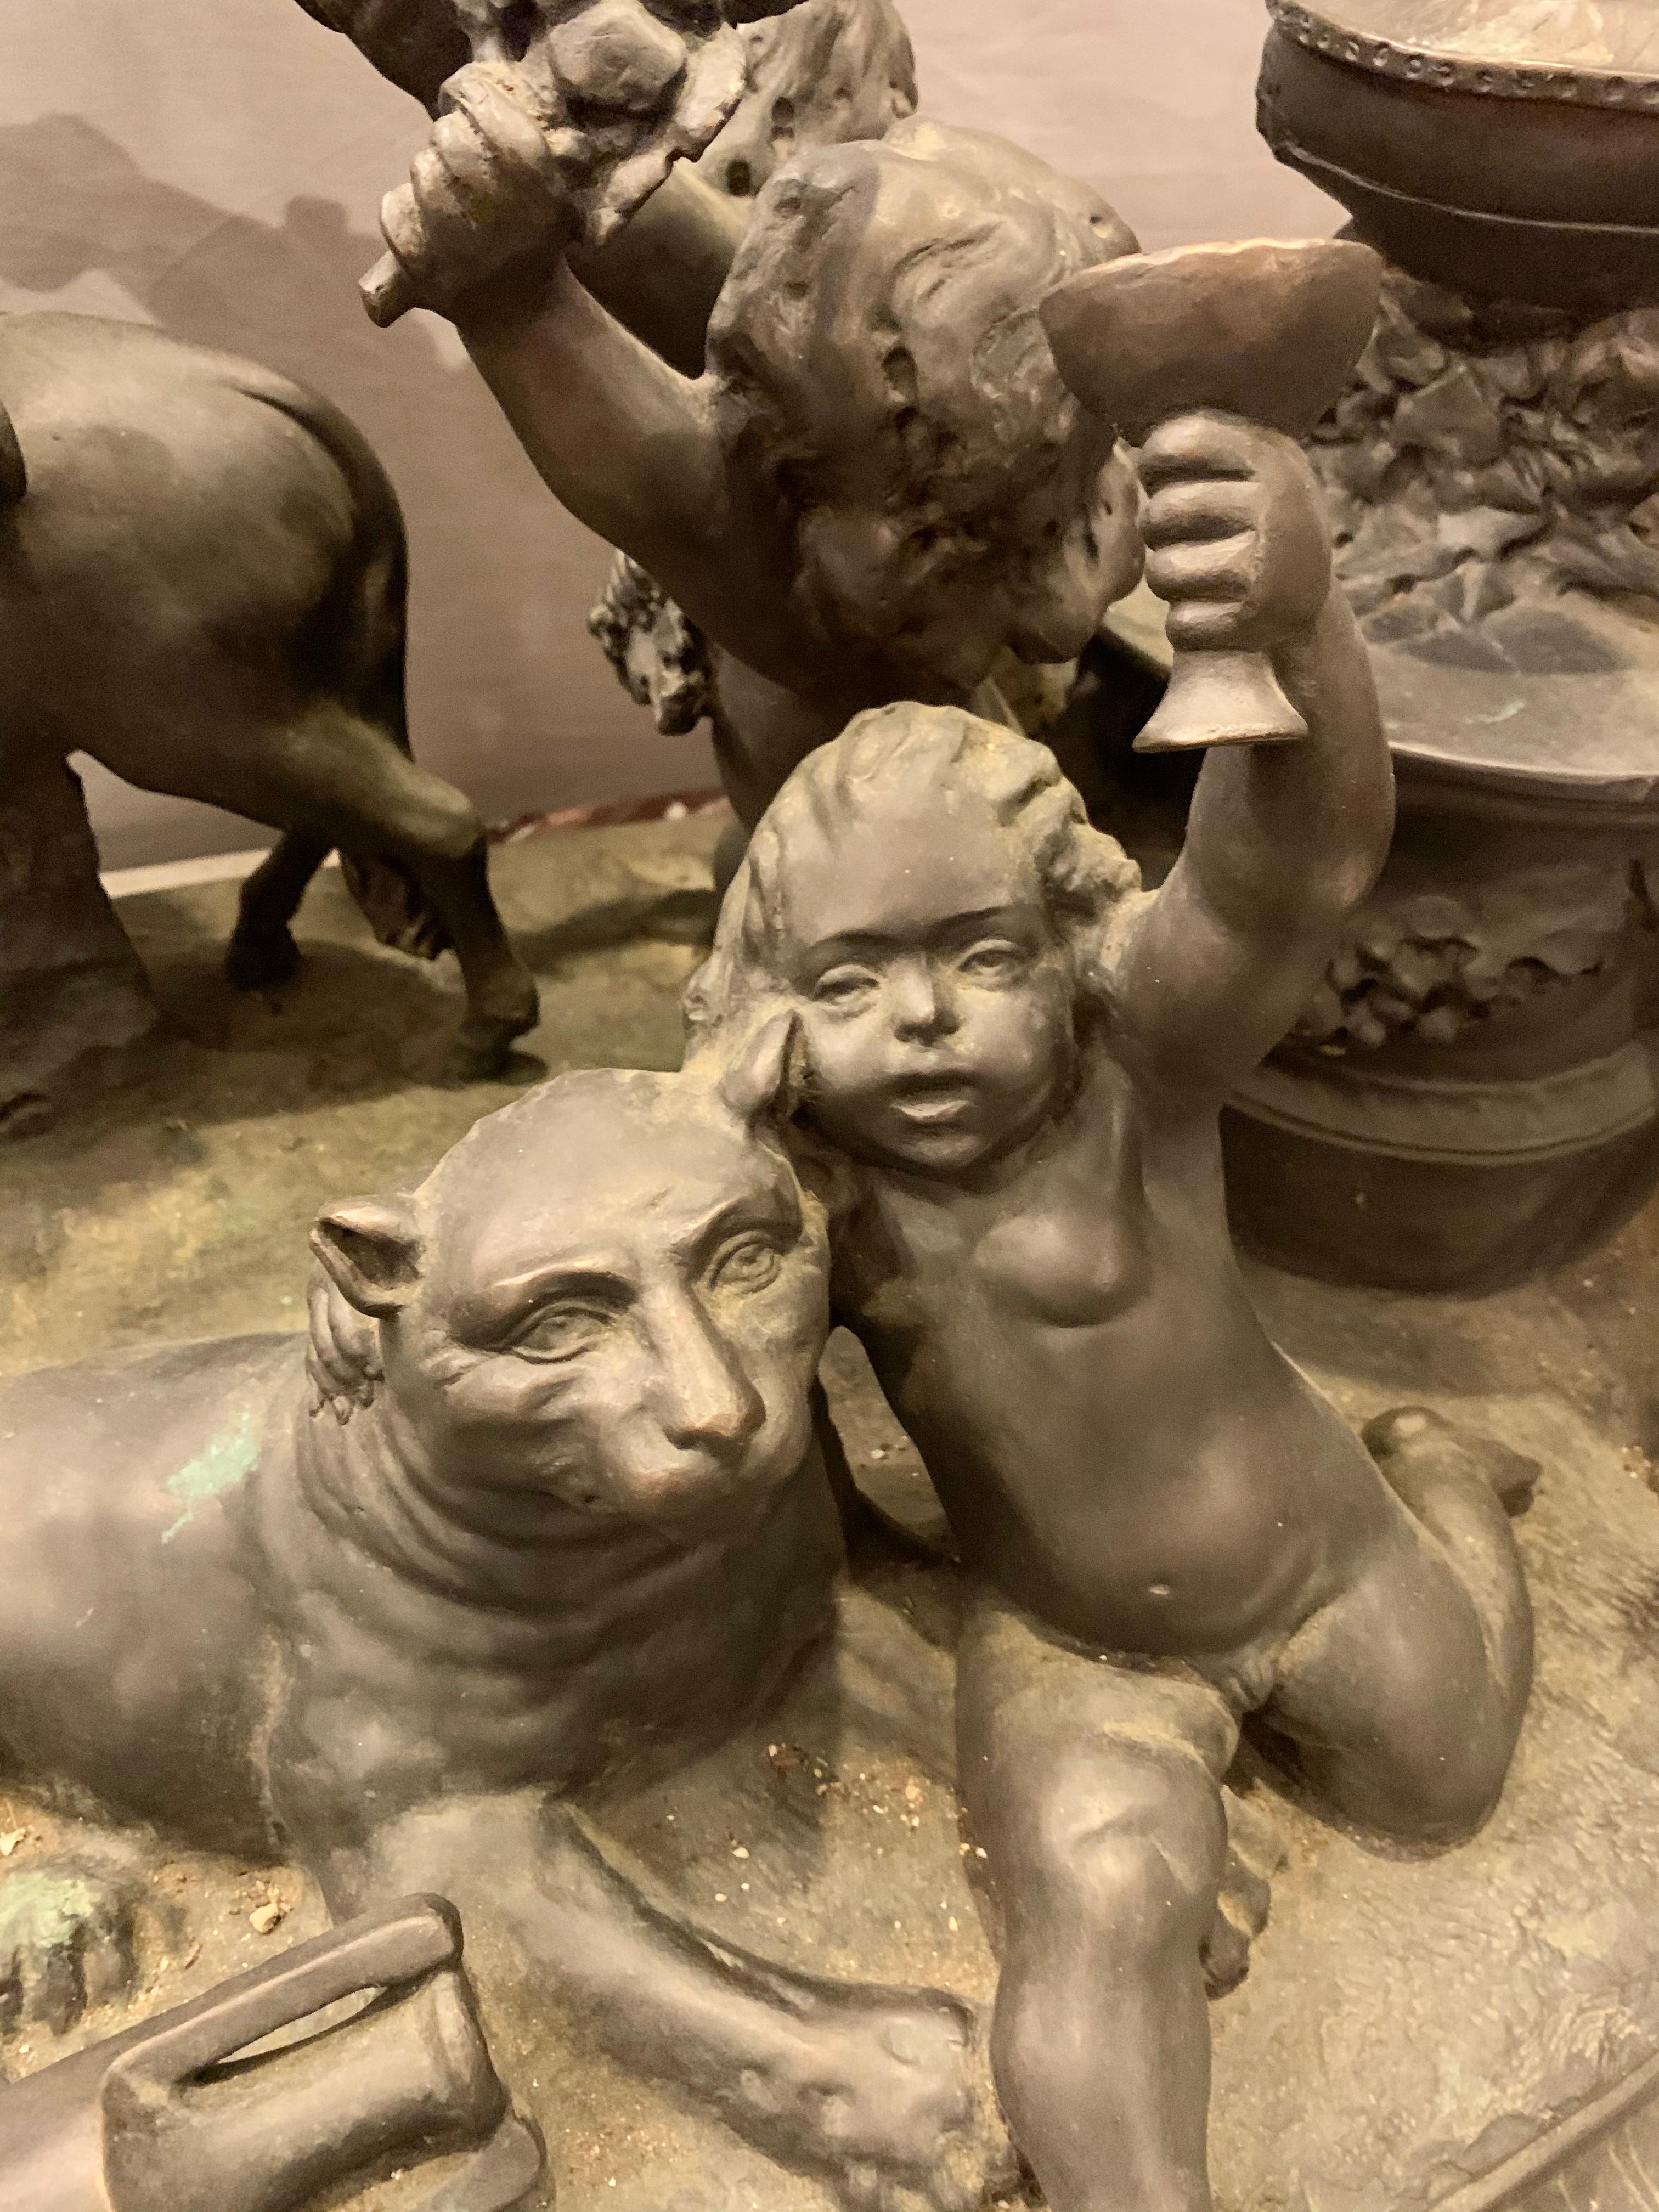 Antique Bronze Cherub Group Sculpture or Centerpiece of Drunken Playing Cherubs 1